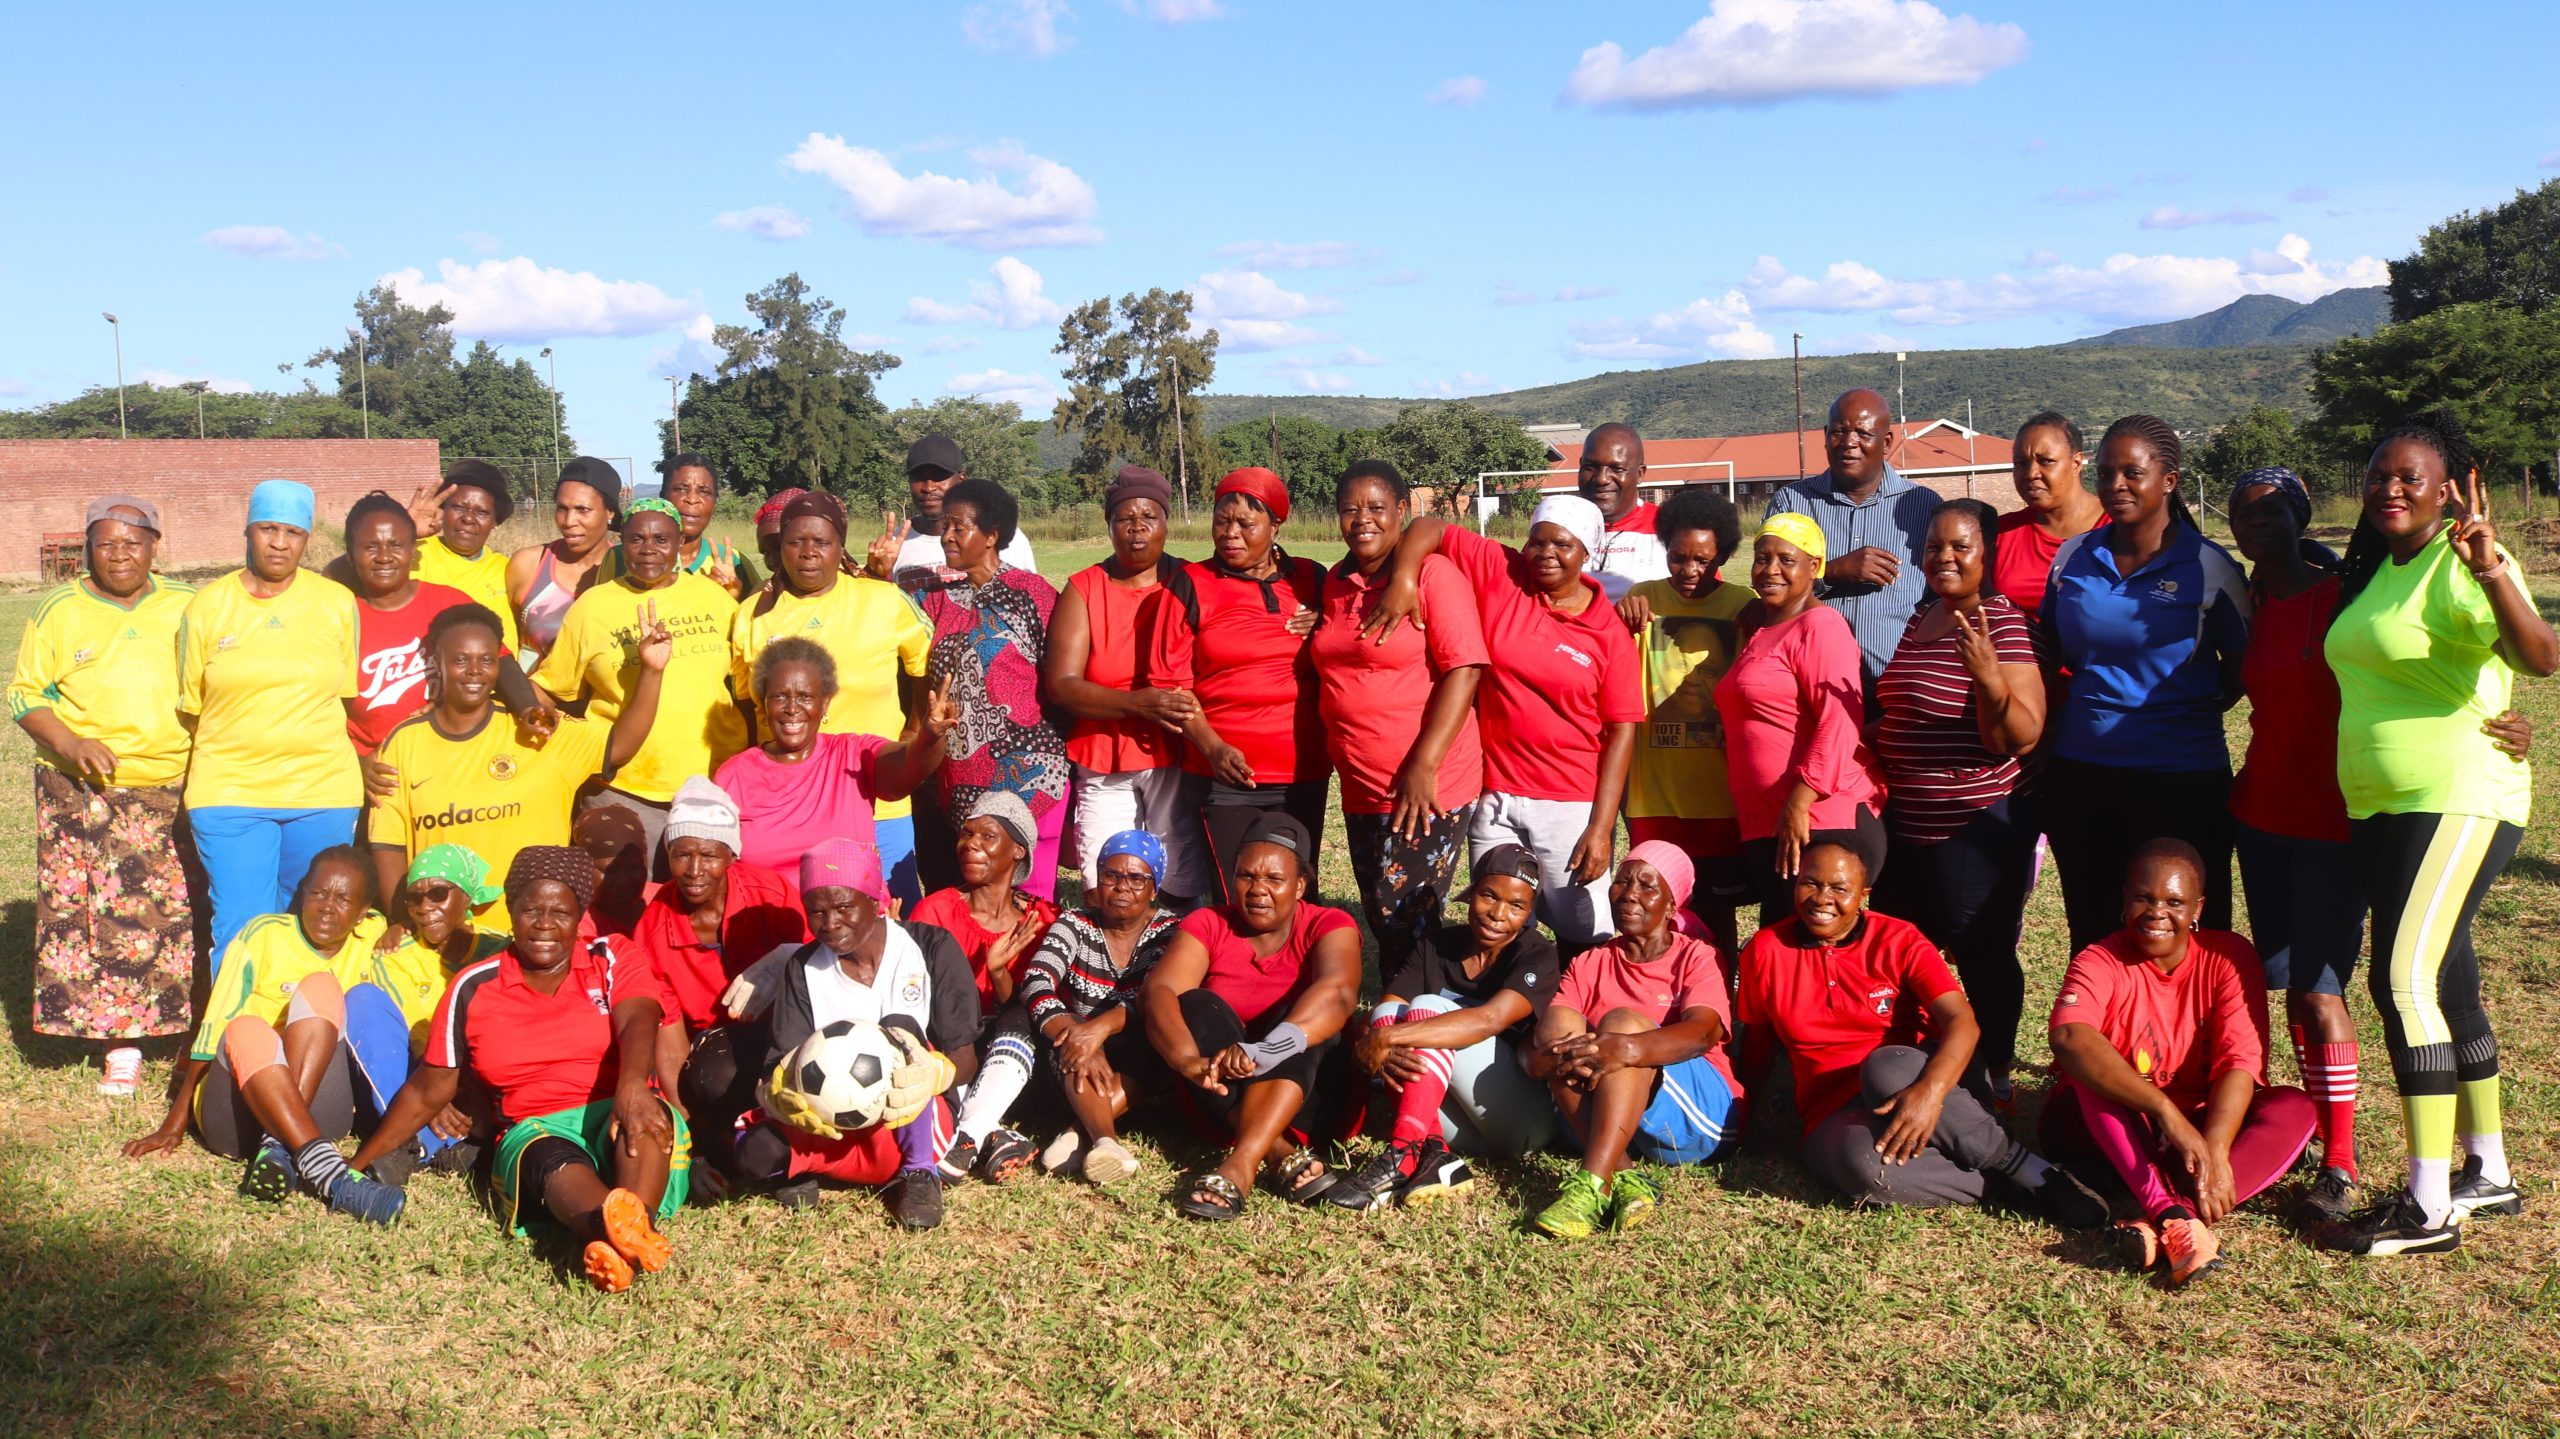 The Vakhegula team at training preparing for the Grannies International Football Tournament